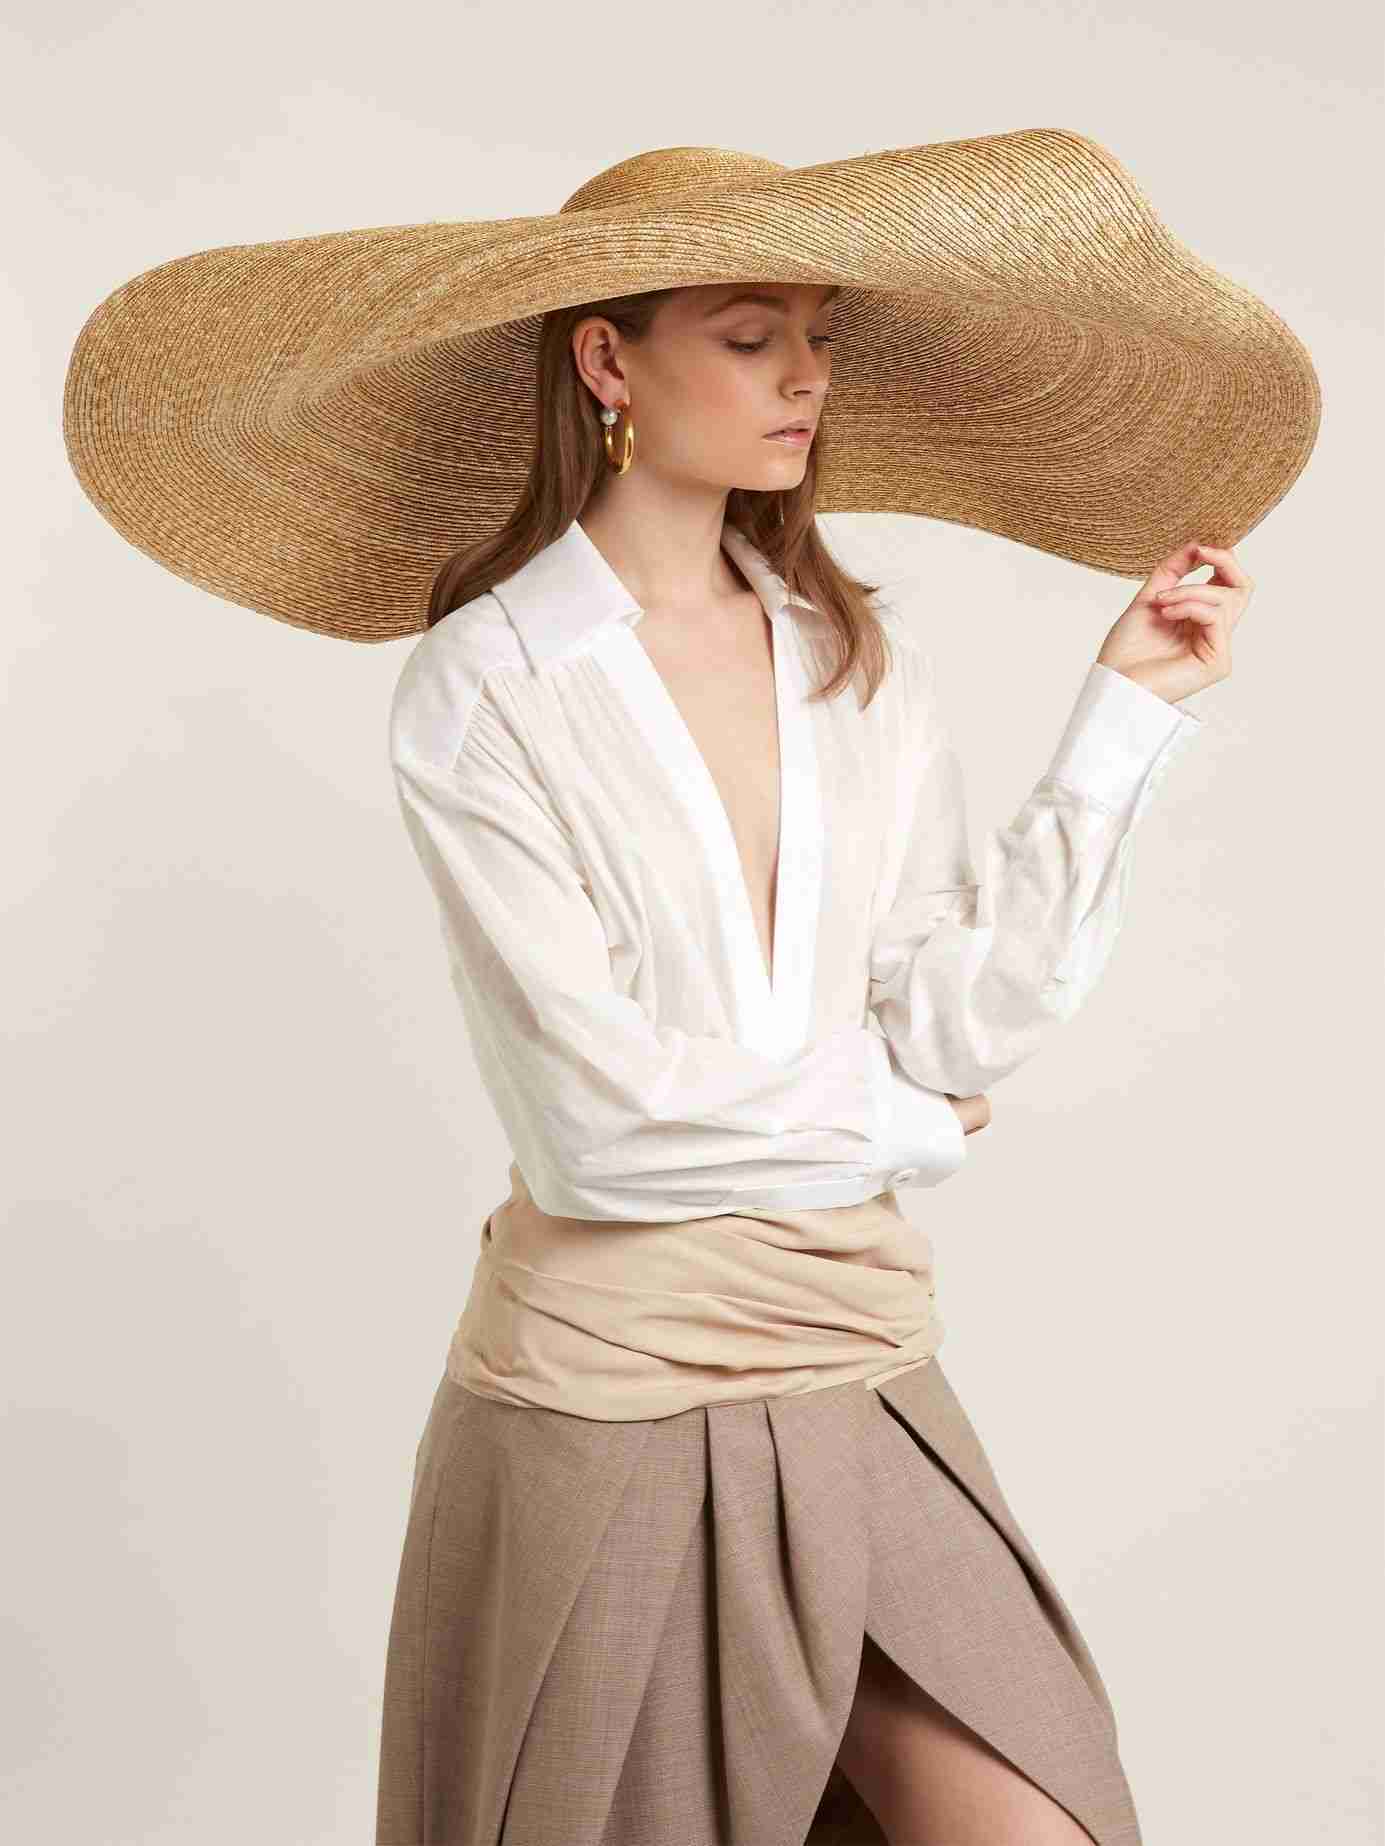 XXL Straw Hat for Women Fashion trends Summer 2019 Shirt blouse white